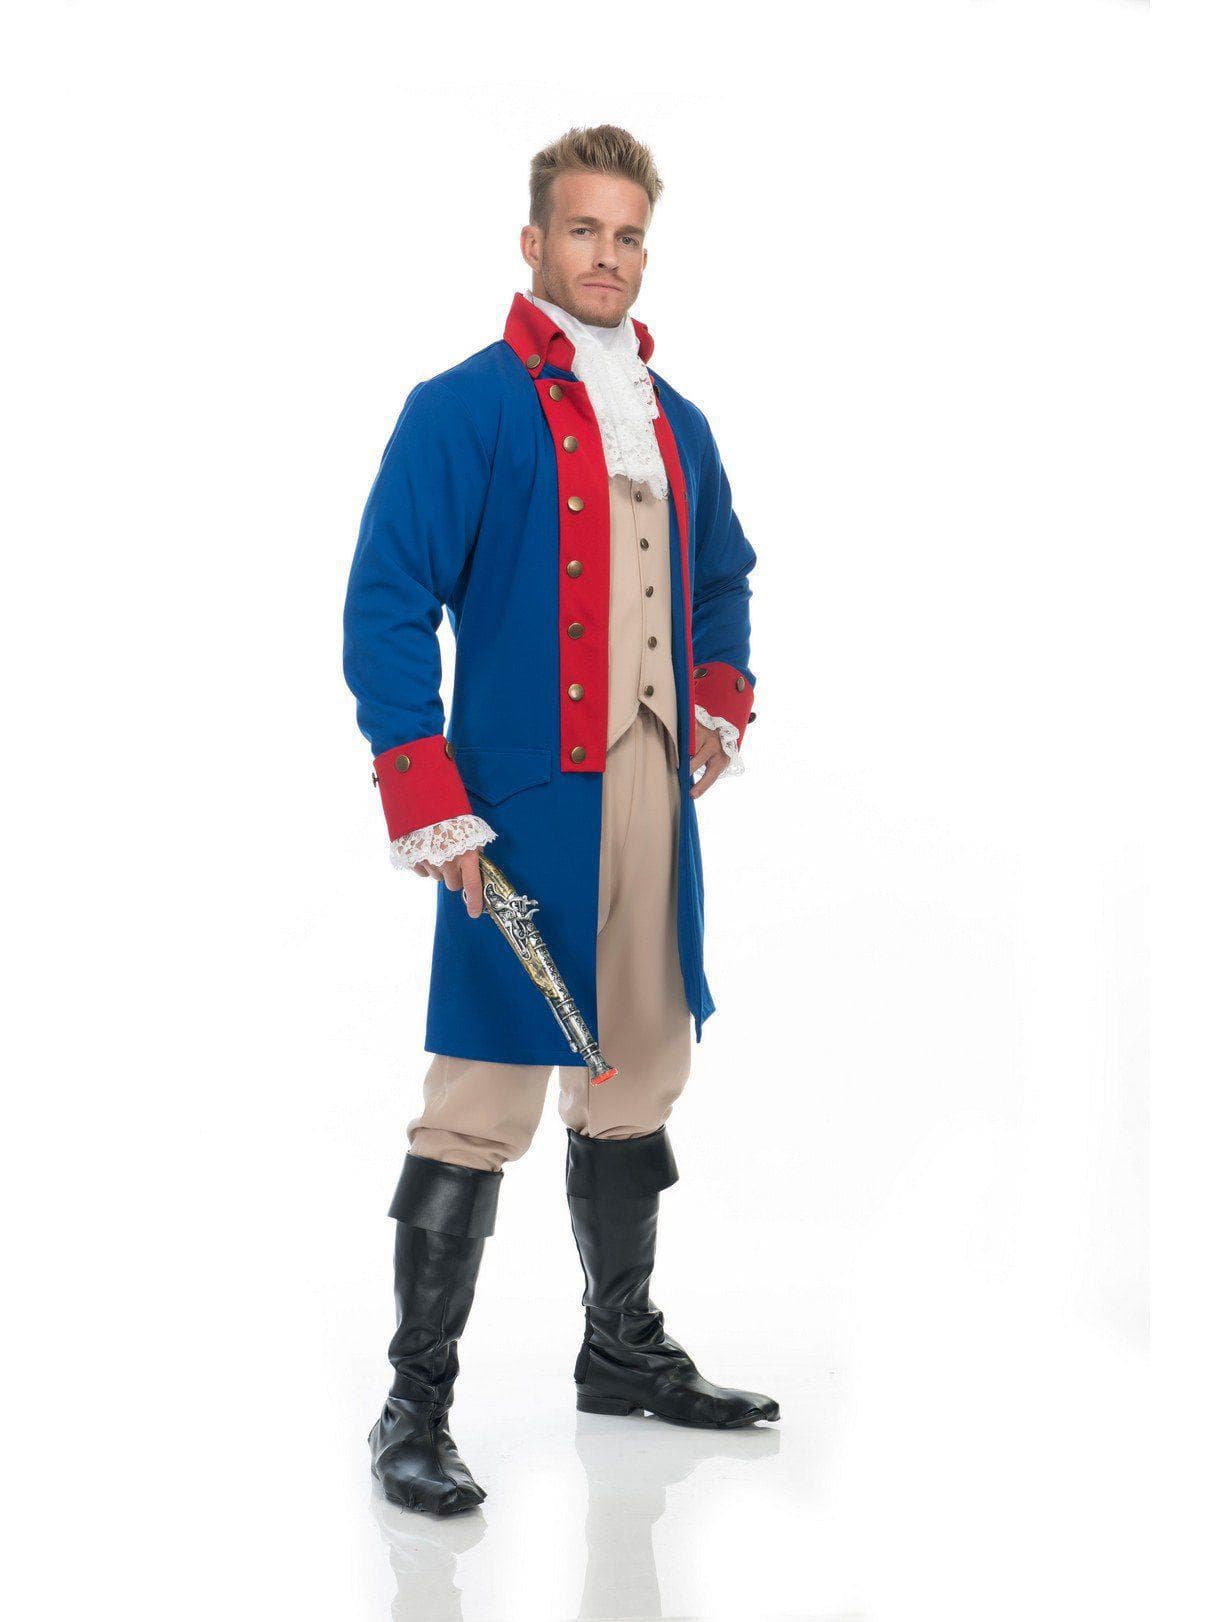 Adult Alexander Hamilton Costume - costumes.com